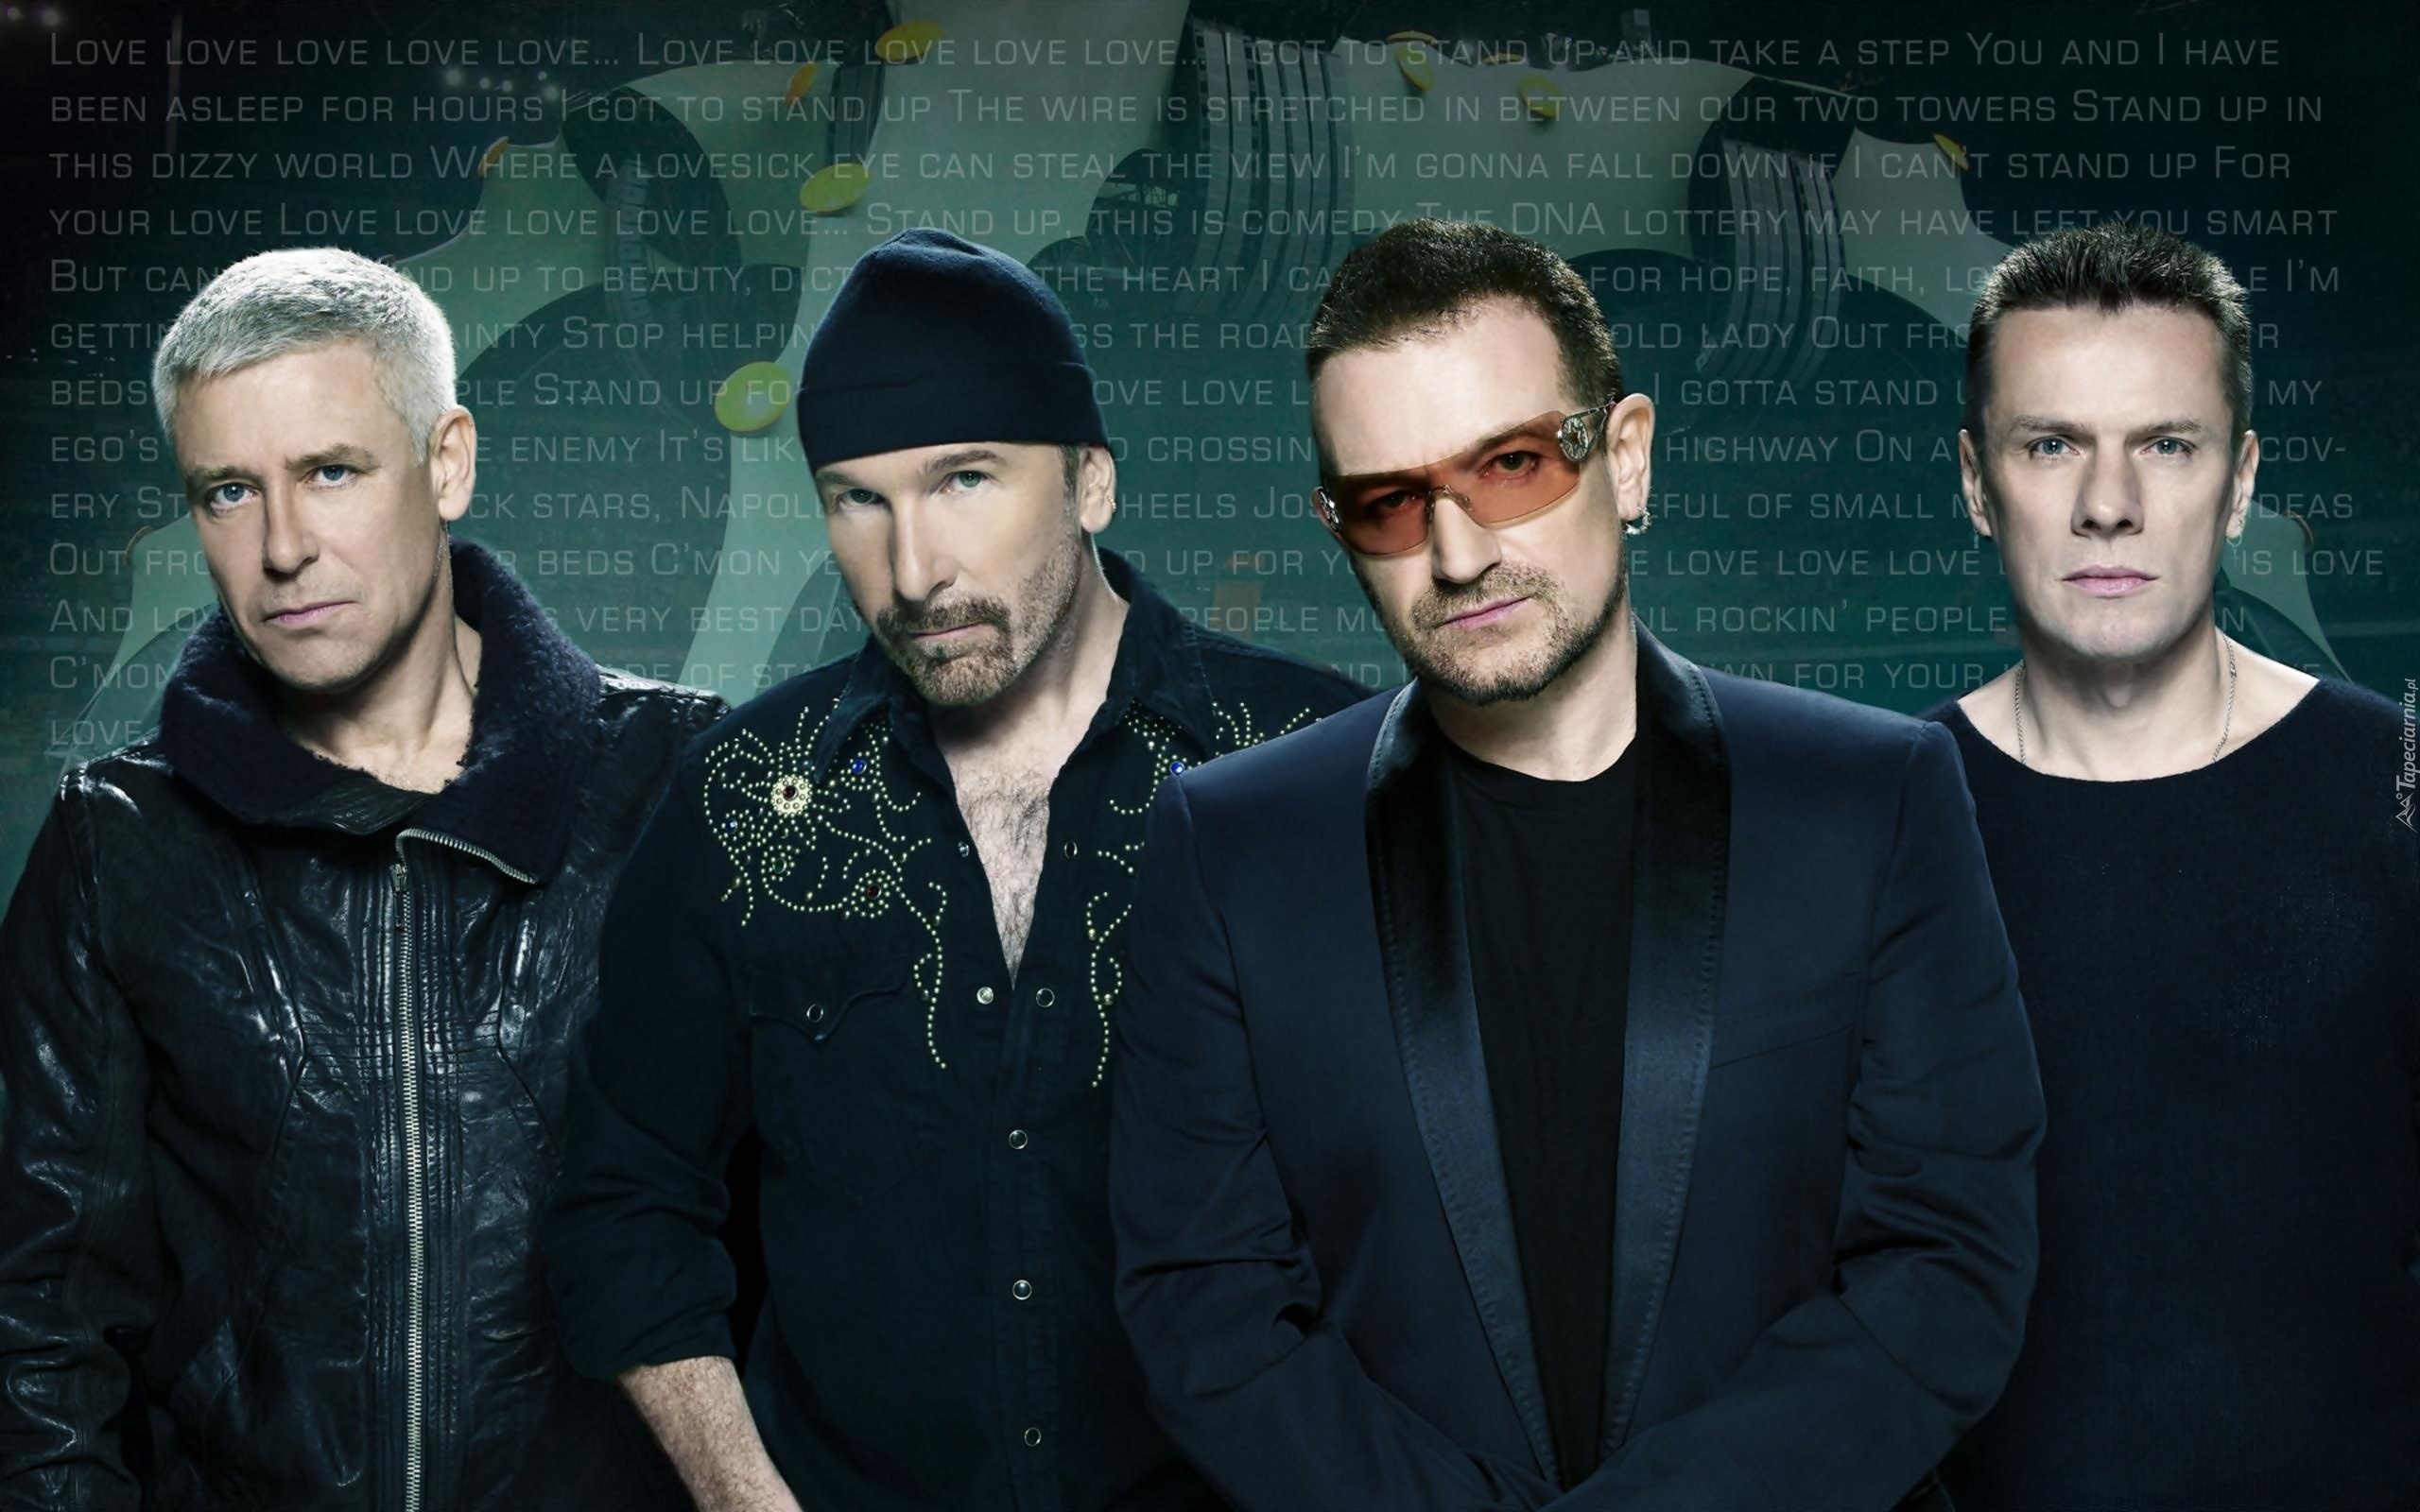 U2, Irlandzki, Zespół, Rock, Adam Clayton, The Edge, Bono, Larry Mullen